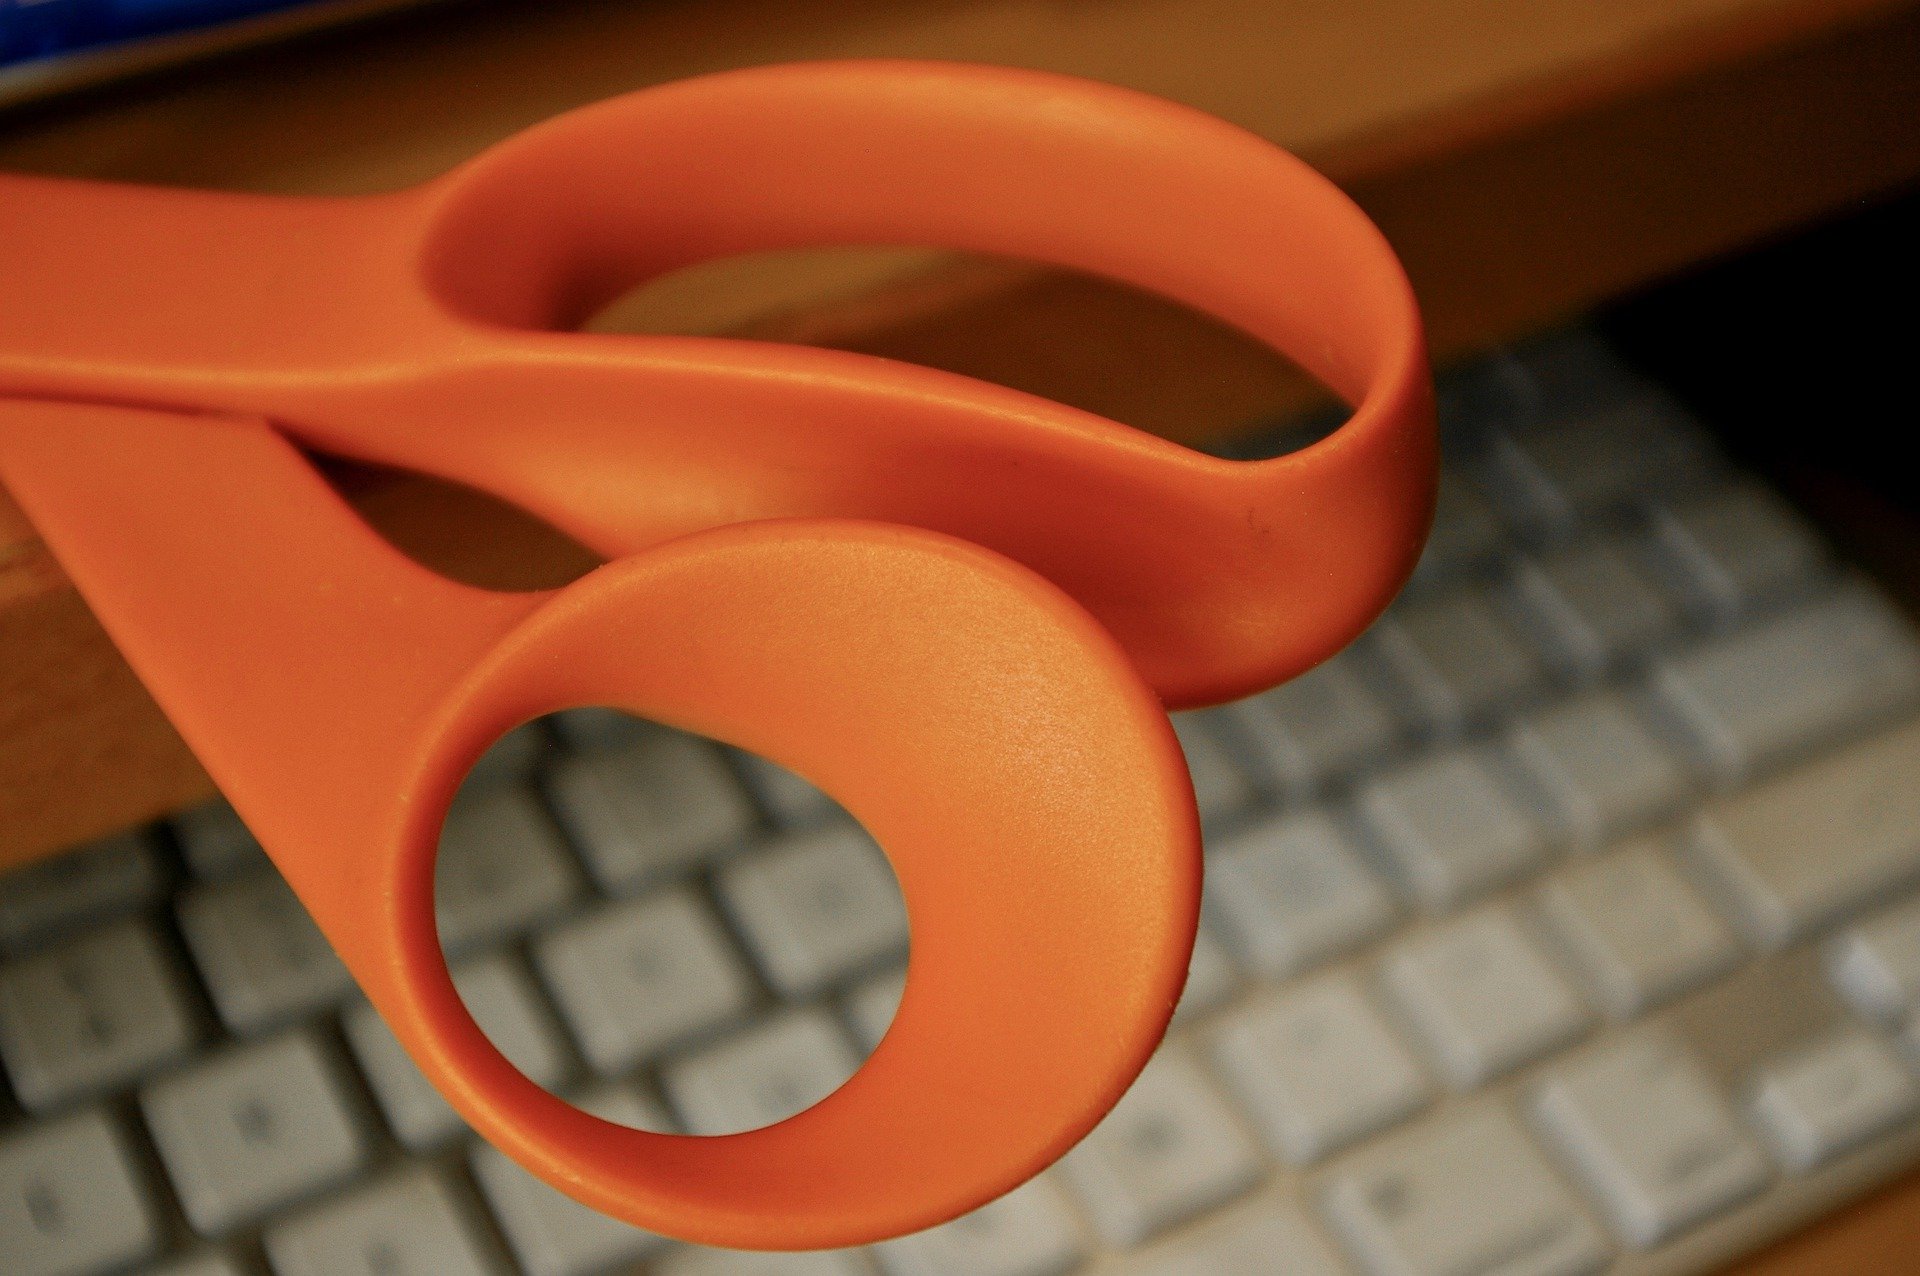 A pair od orange scissors | Source: Pixabay